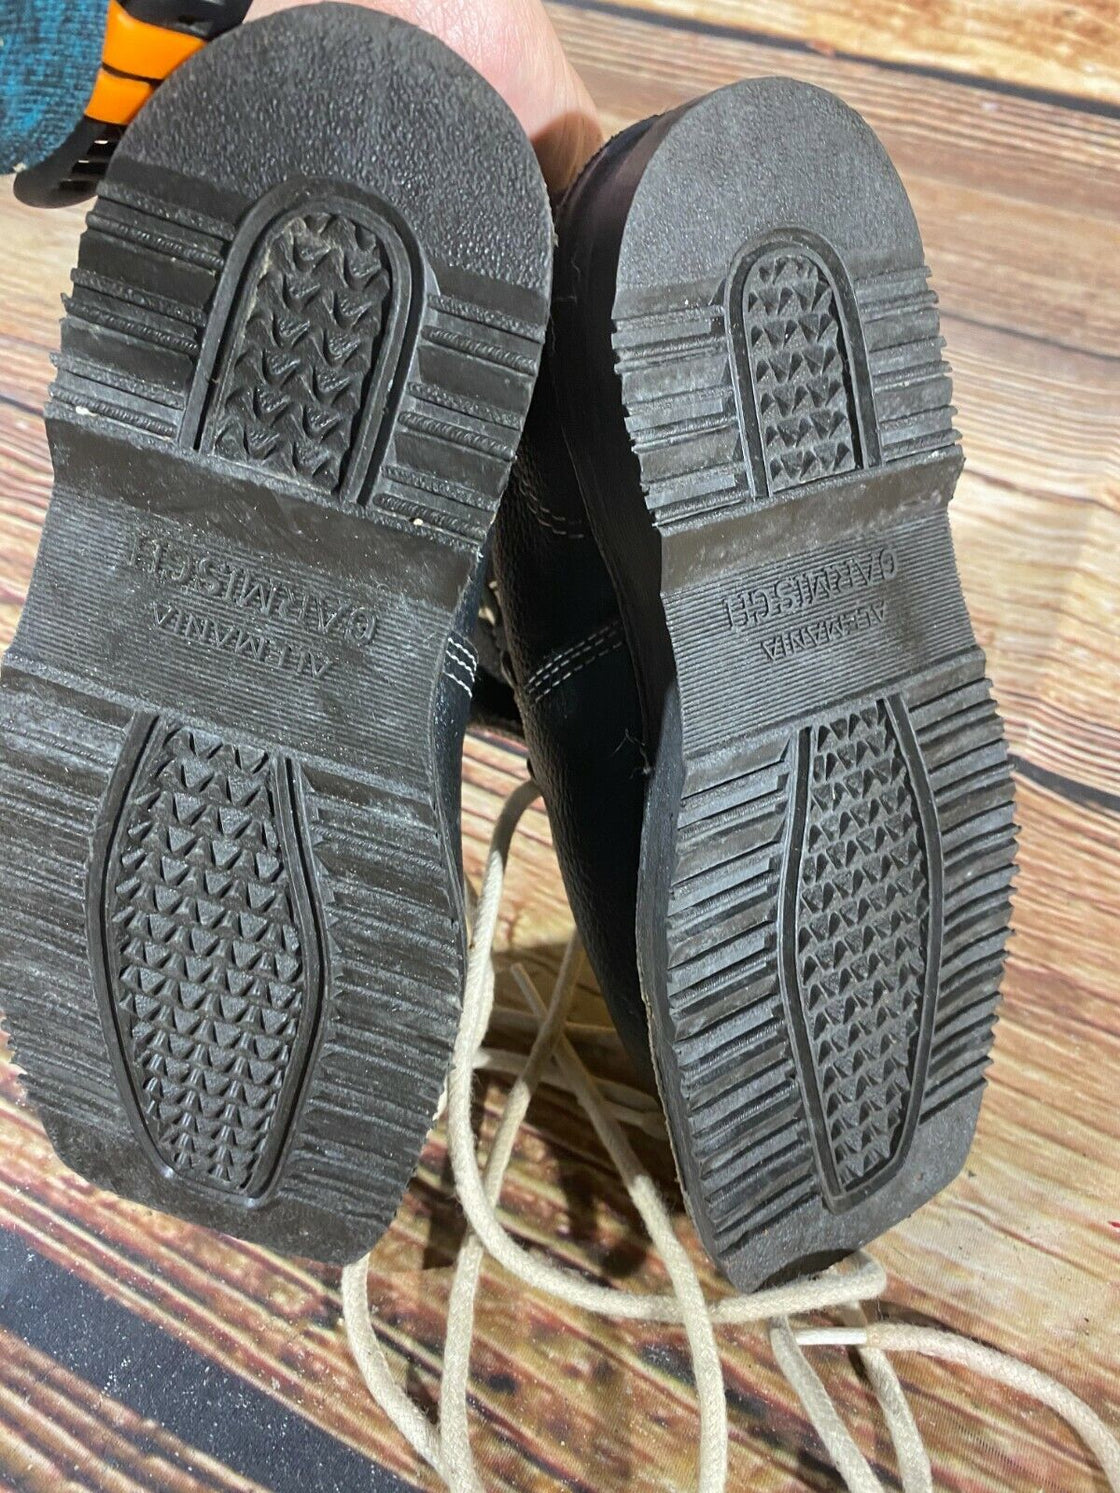 DALEX Vintage Nordic Cross Country Ski Boots EU29 US11 Retro Kandahar / Cable